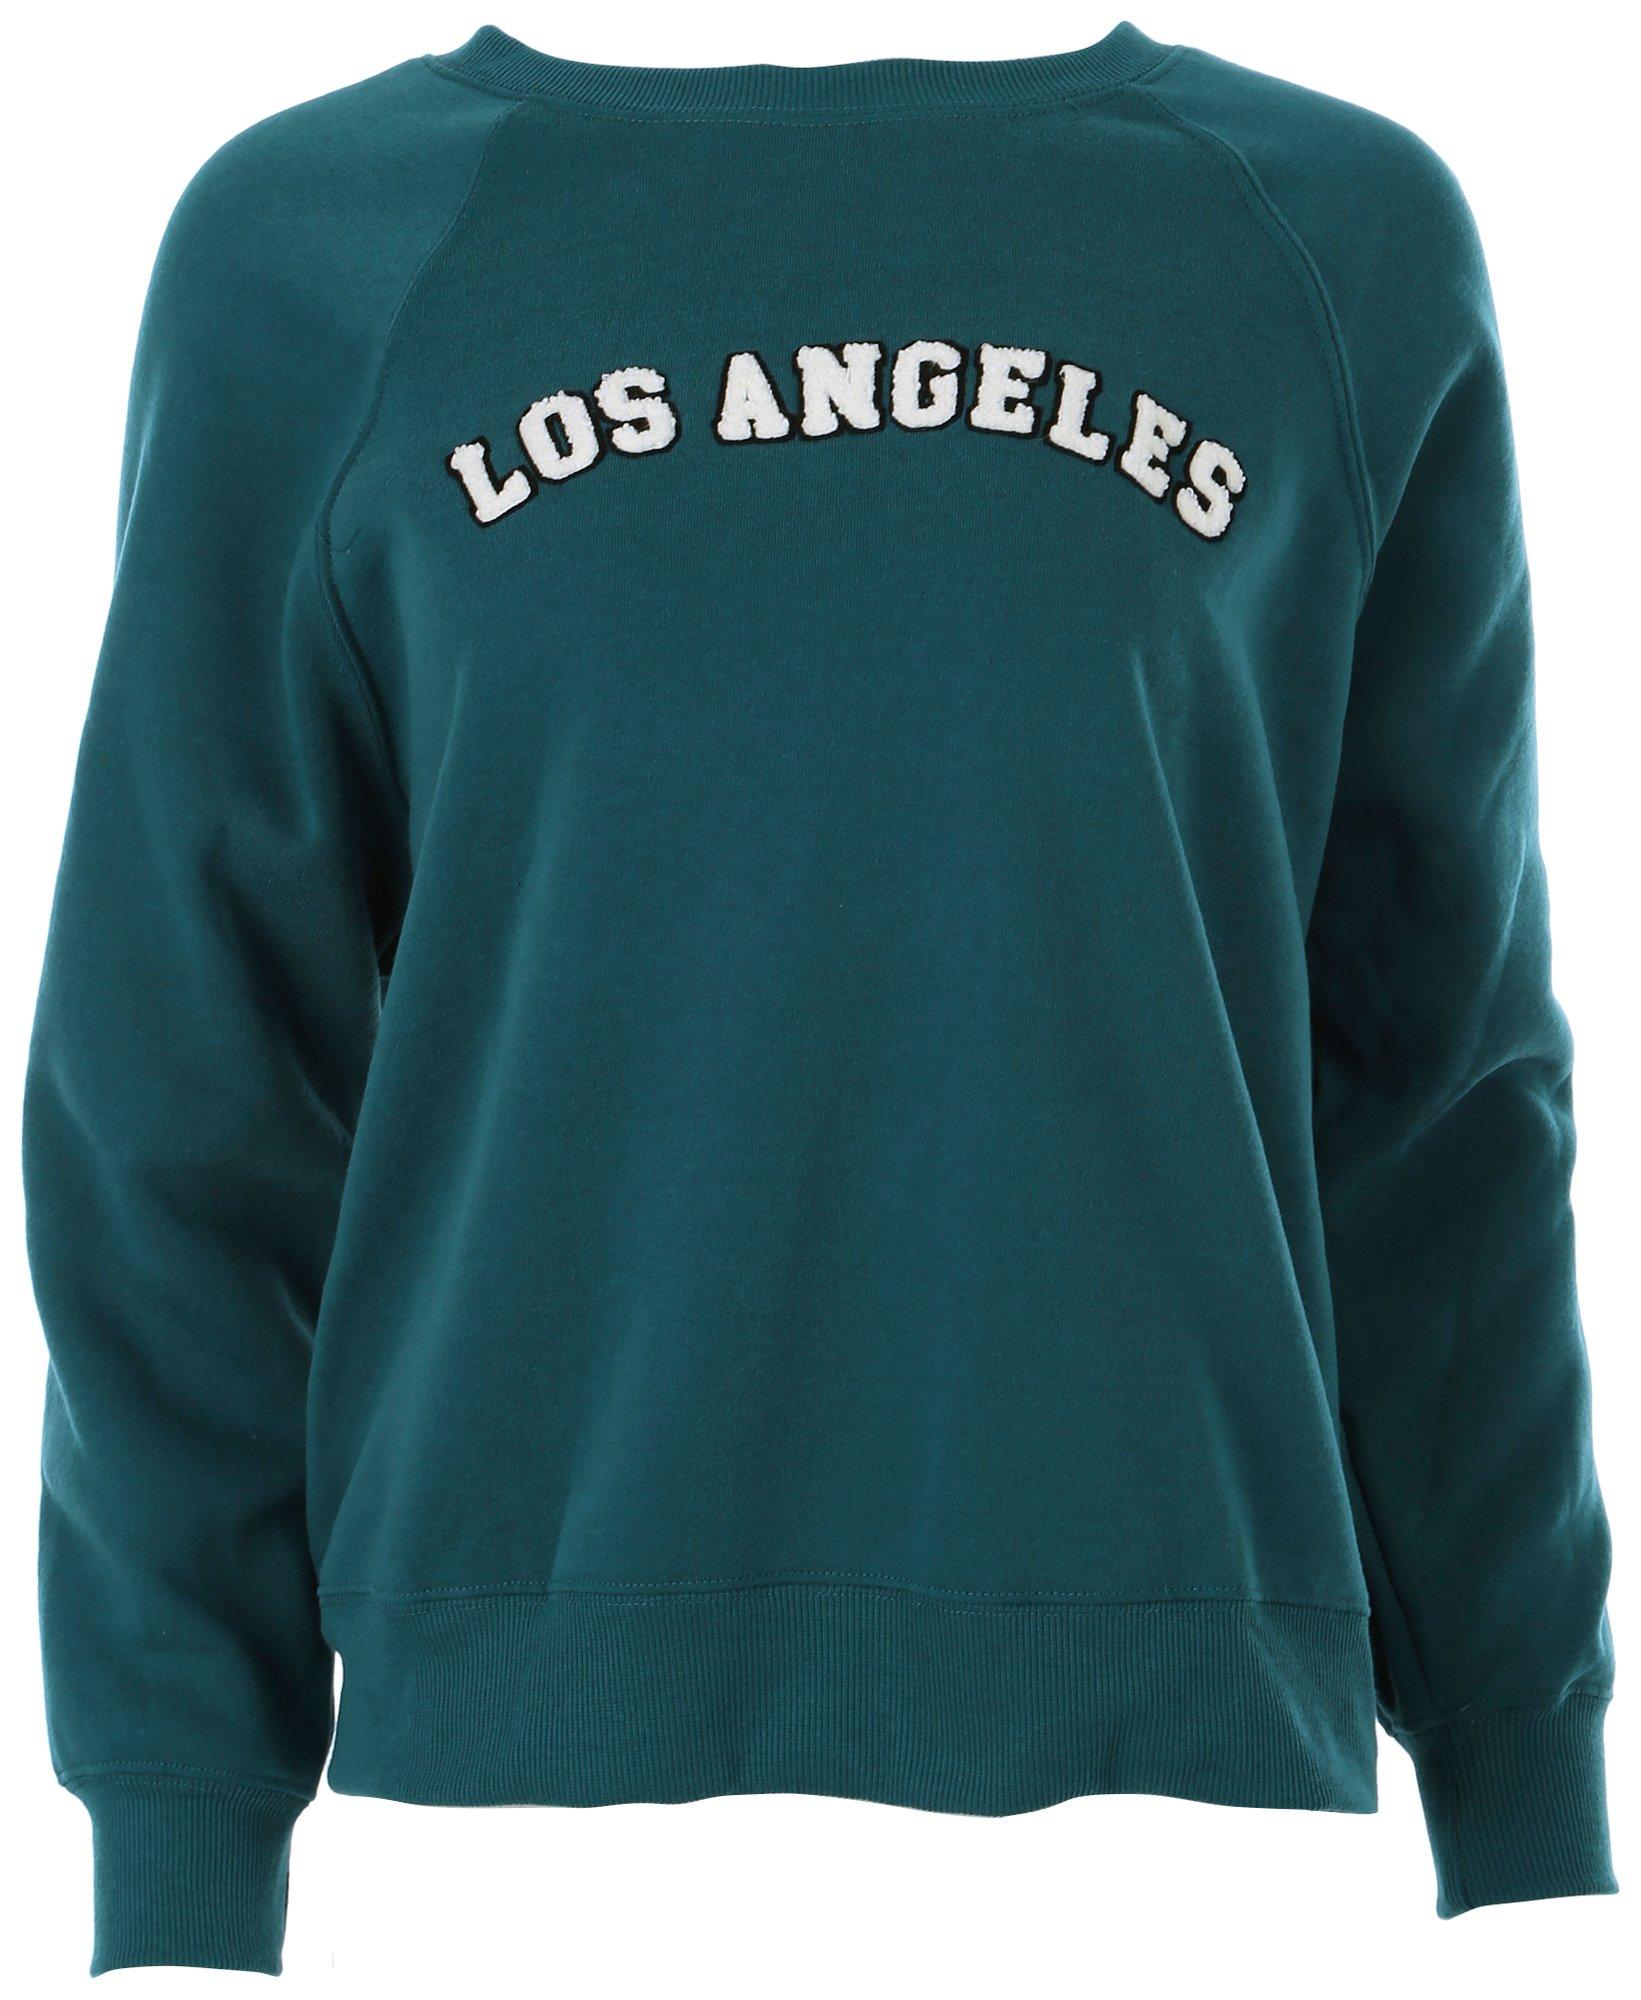 Juniors Los Angeles Patch Long Sleeve Sweatshirt